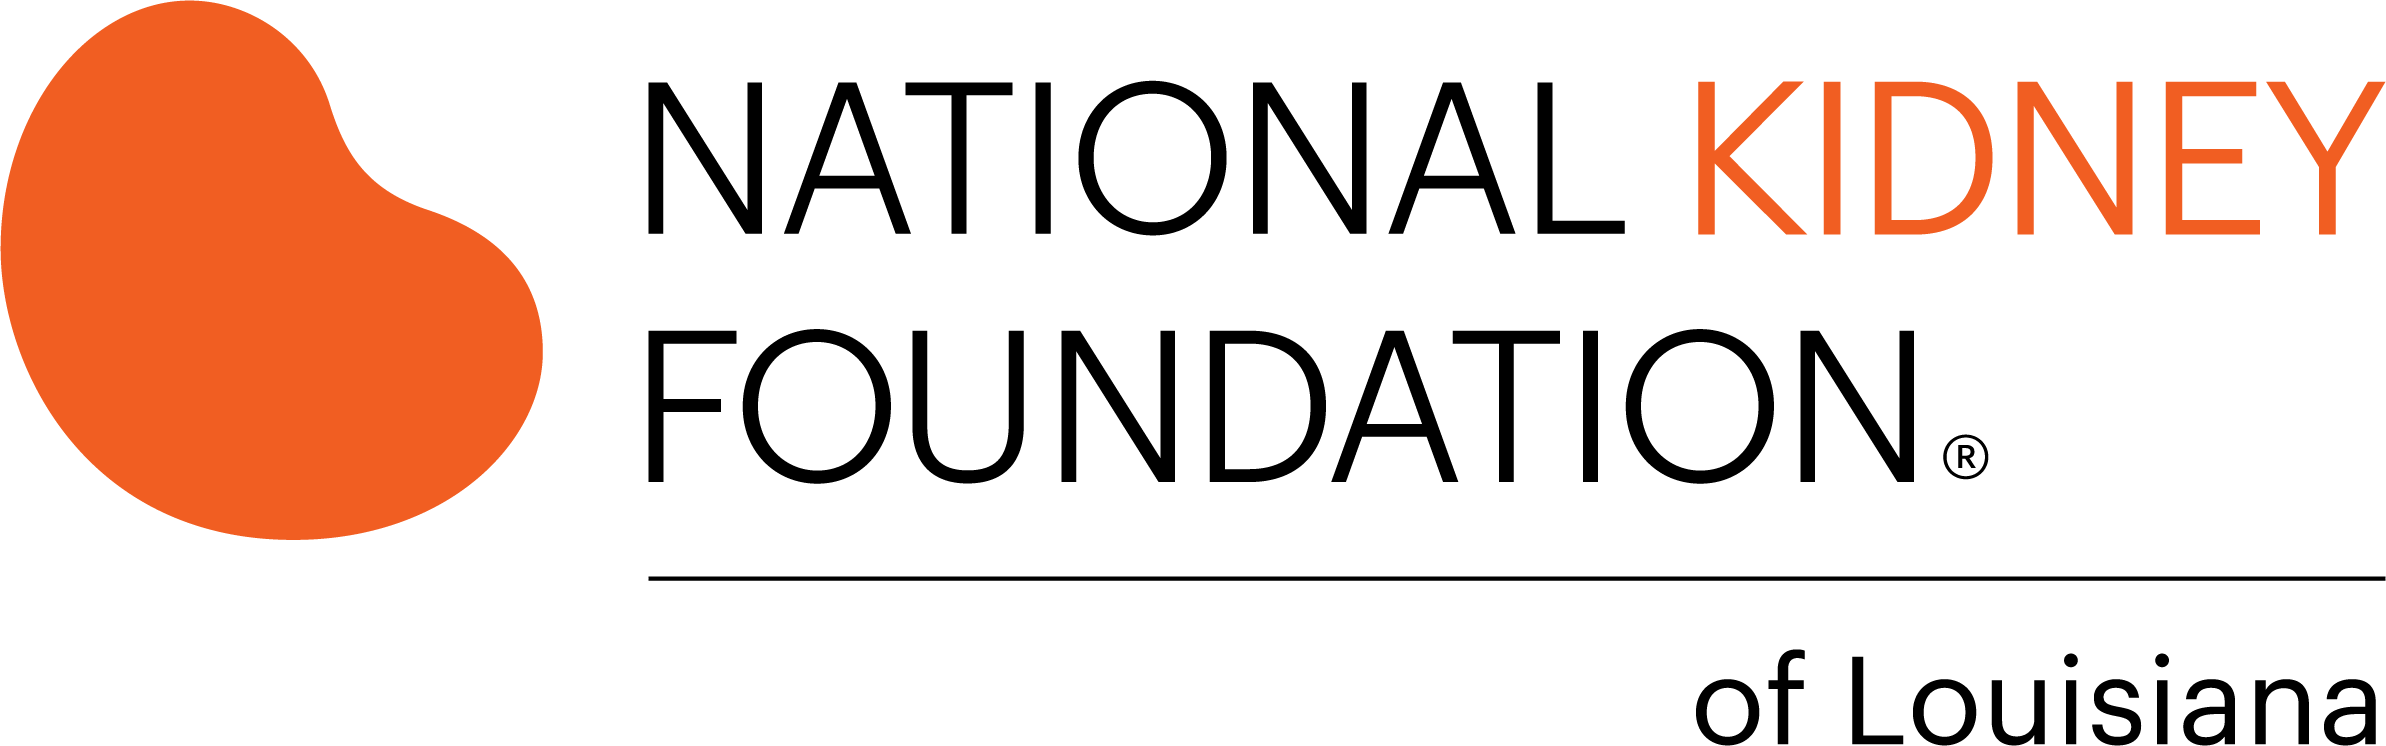 National Kidney Foundation of Louisiana, Inc. logo